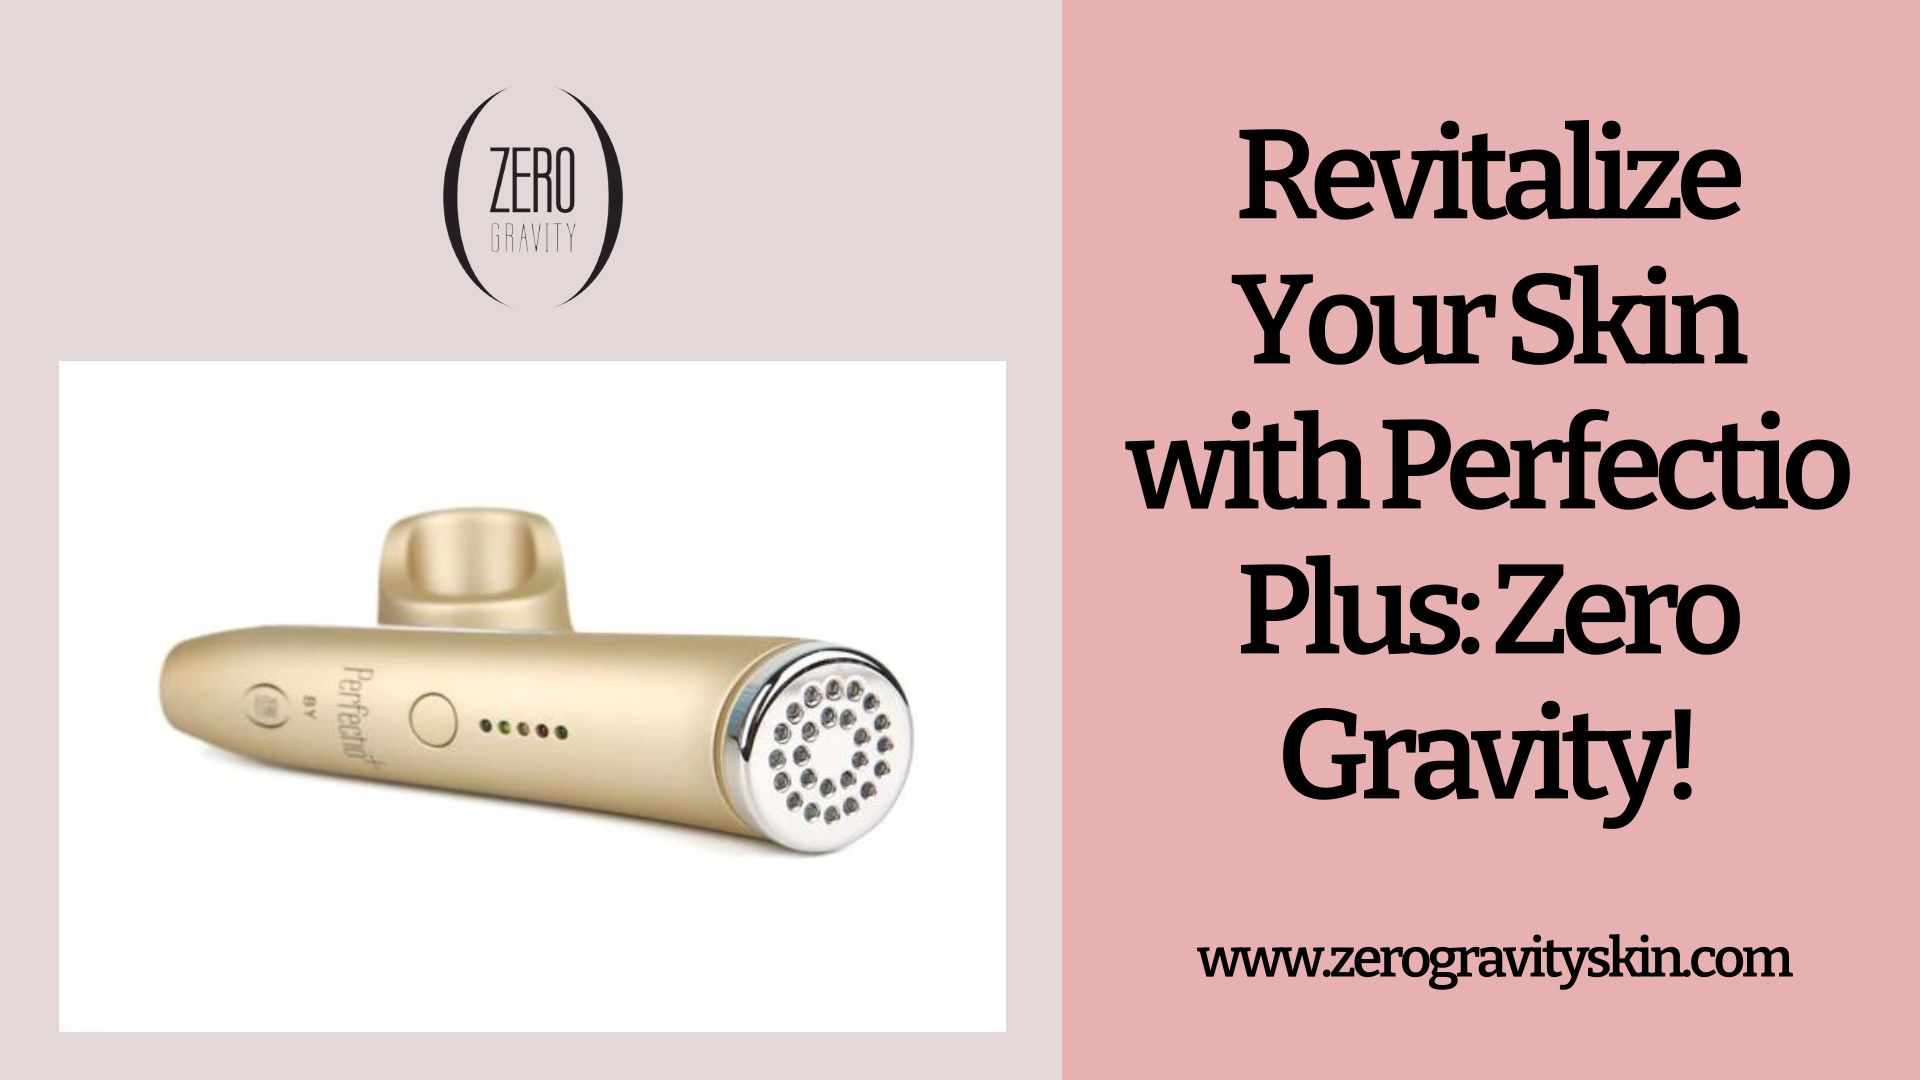 Revitalize Your Skin With Perfectio Plus Zero Gravity!